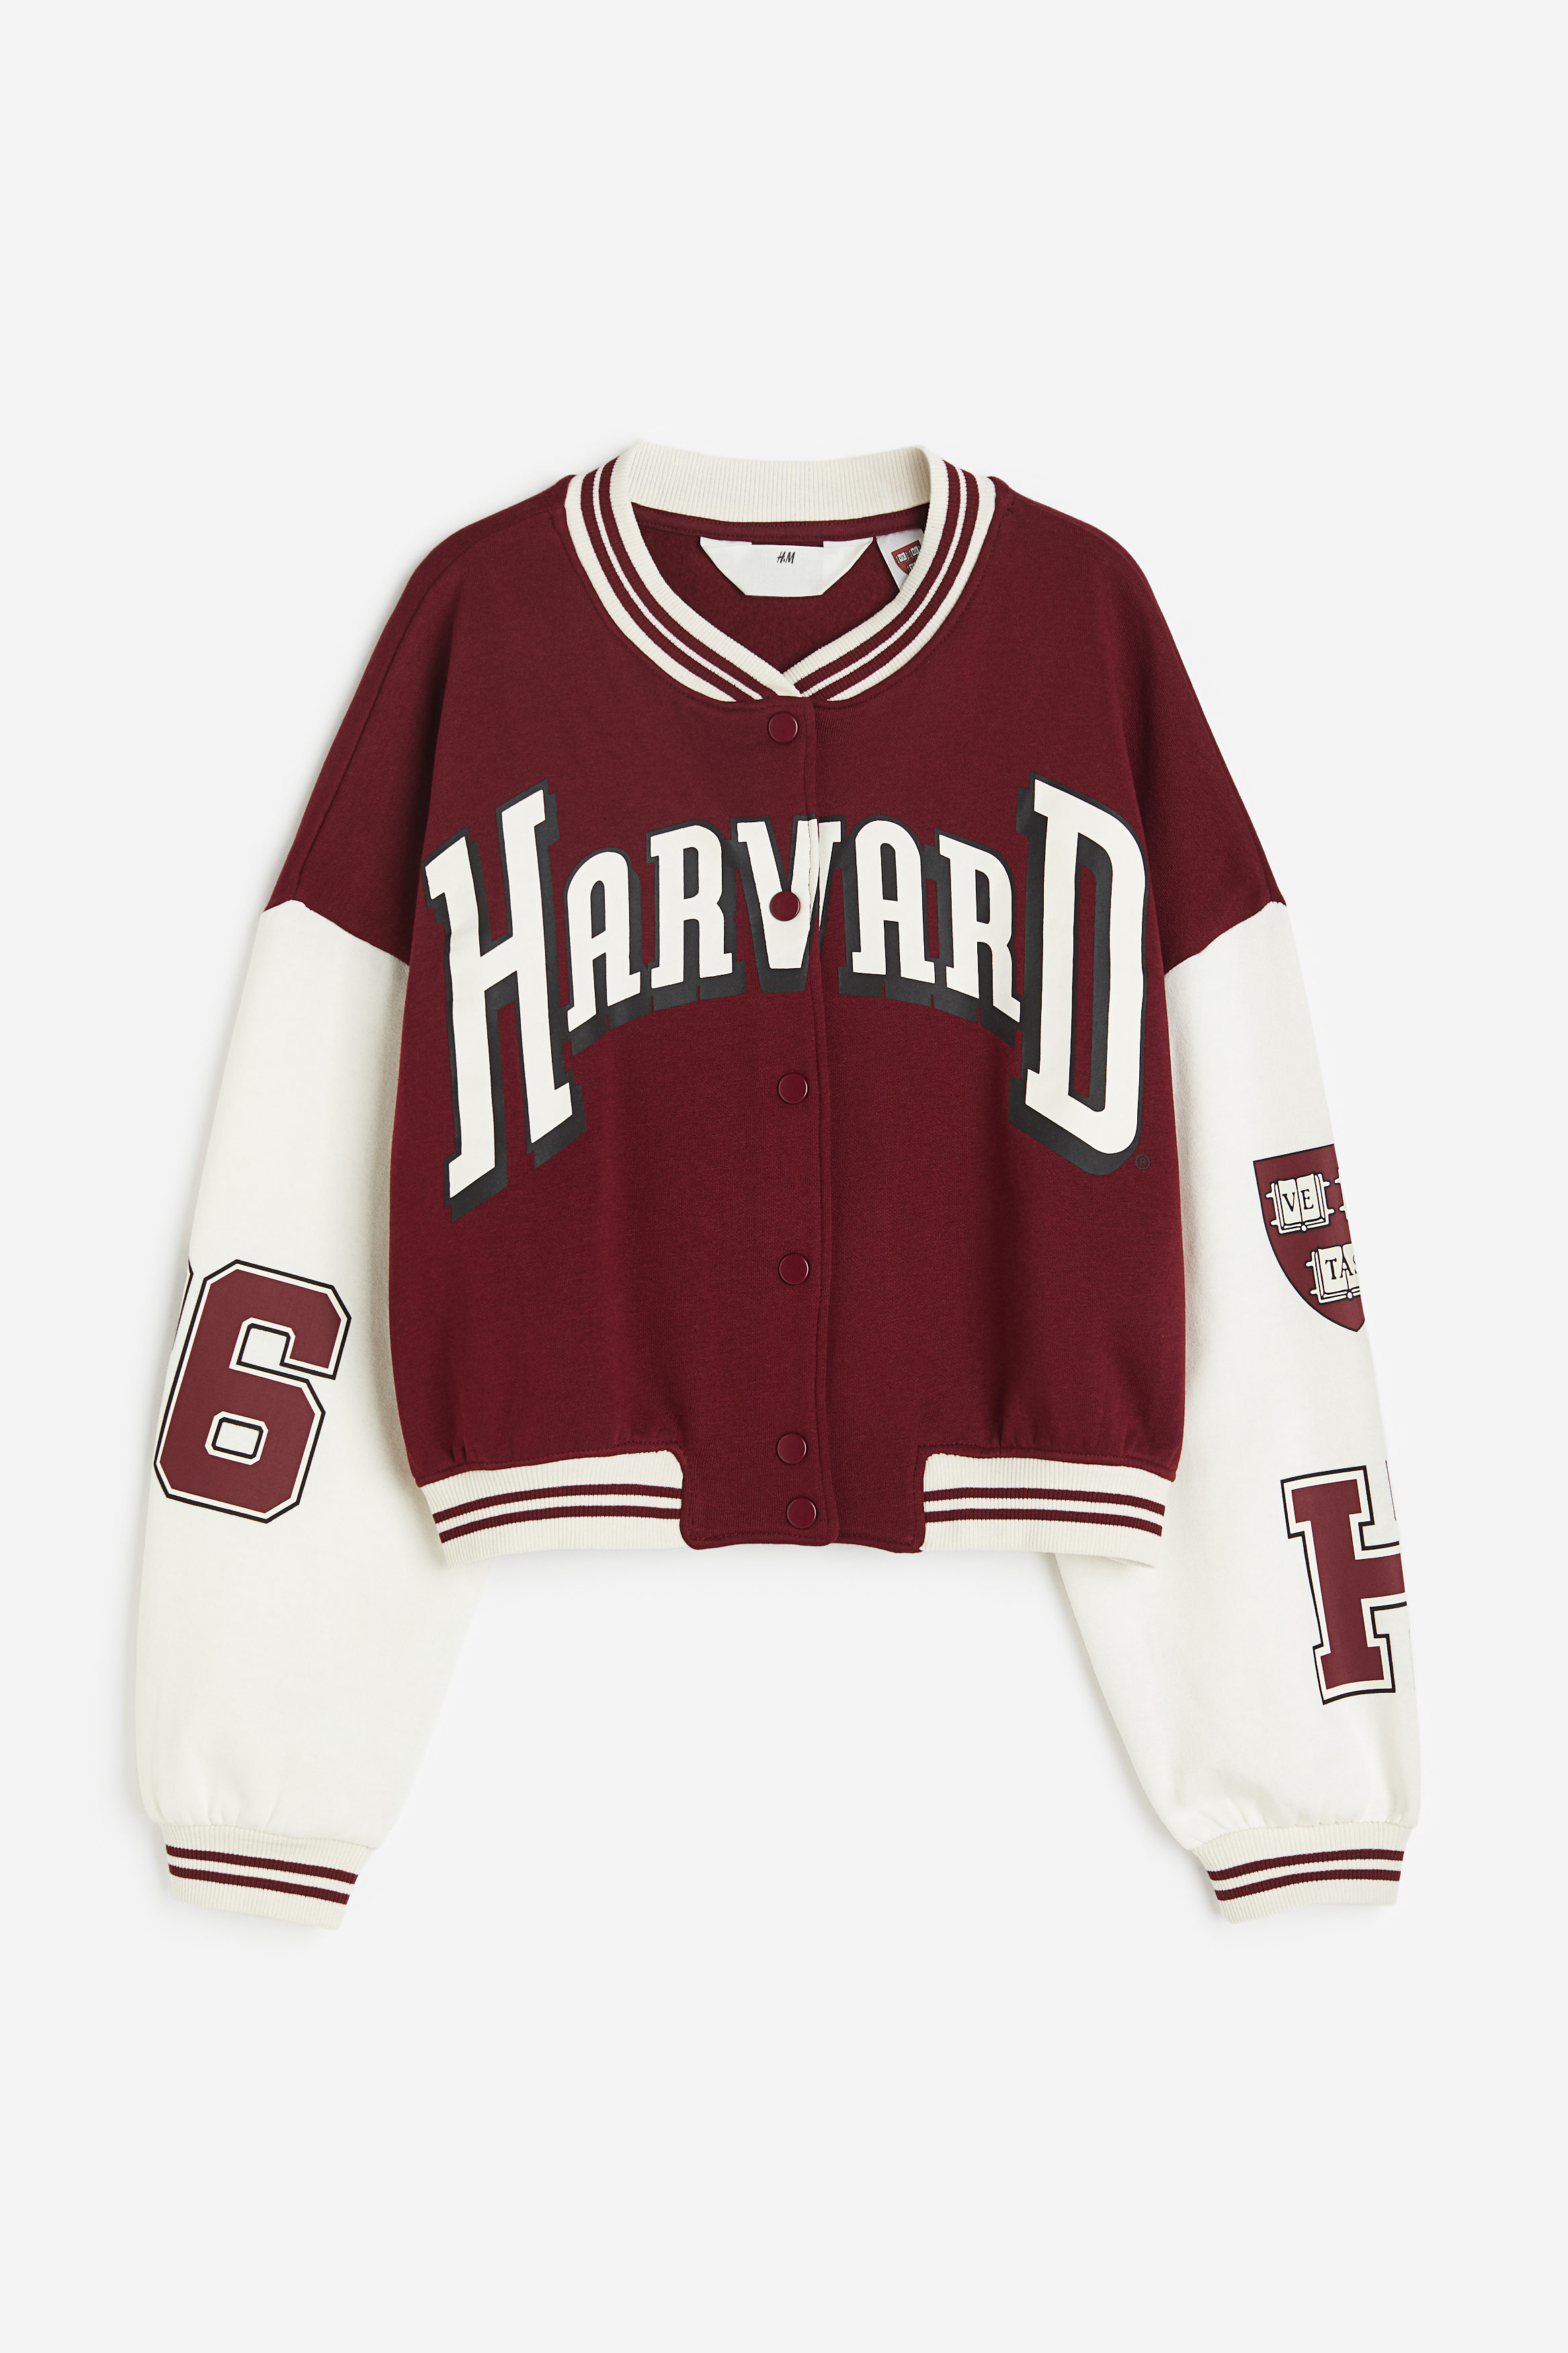 American College × Harvard × Varsity Jacket Harvard S… - Gem